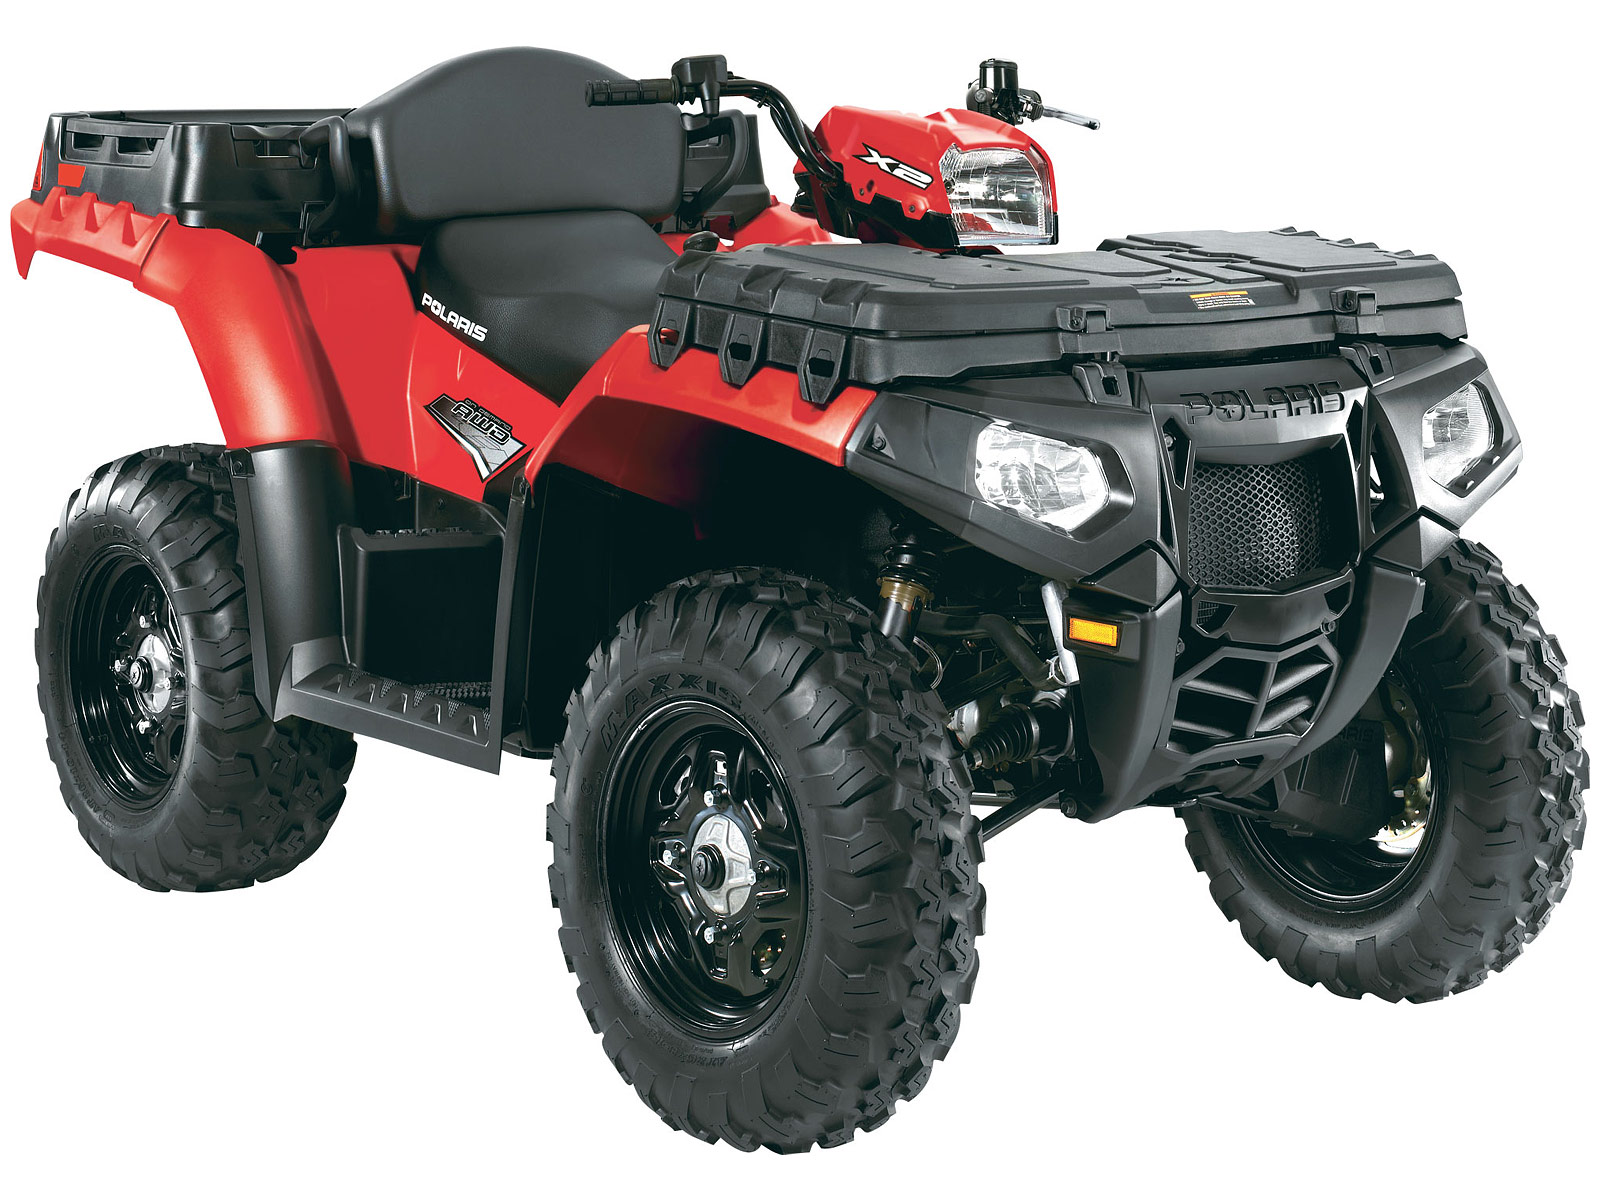 2012 Polaris Sportsman X2 550 ATV pictures, specifications